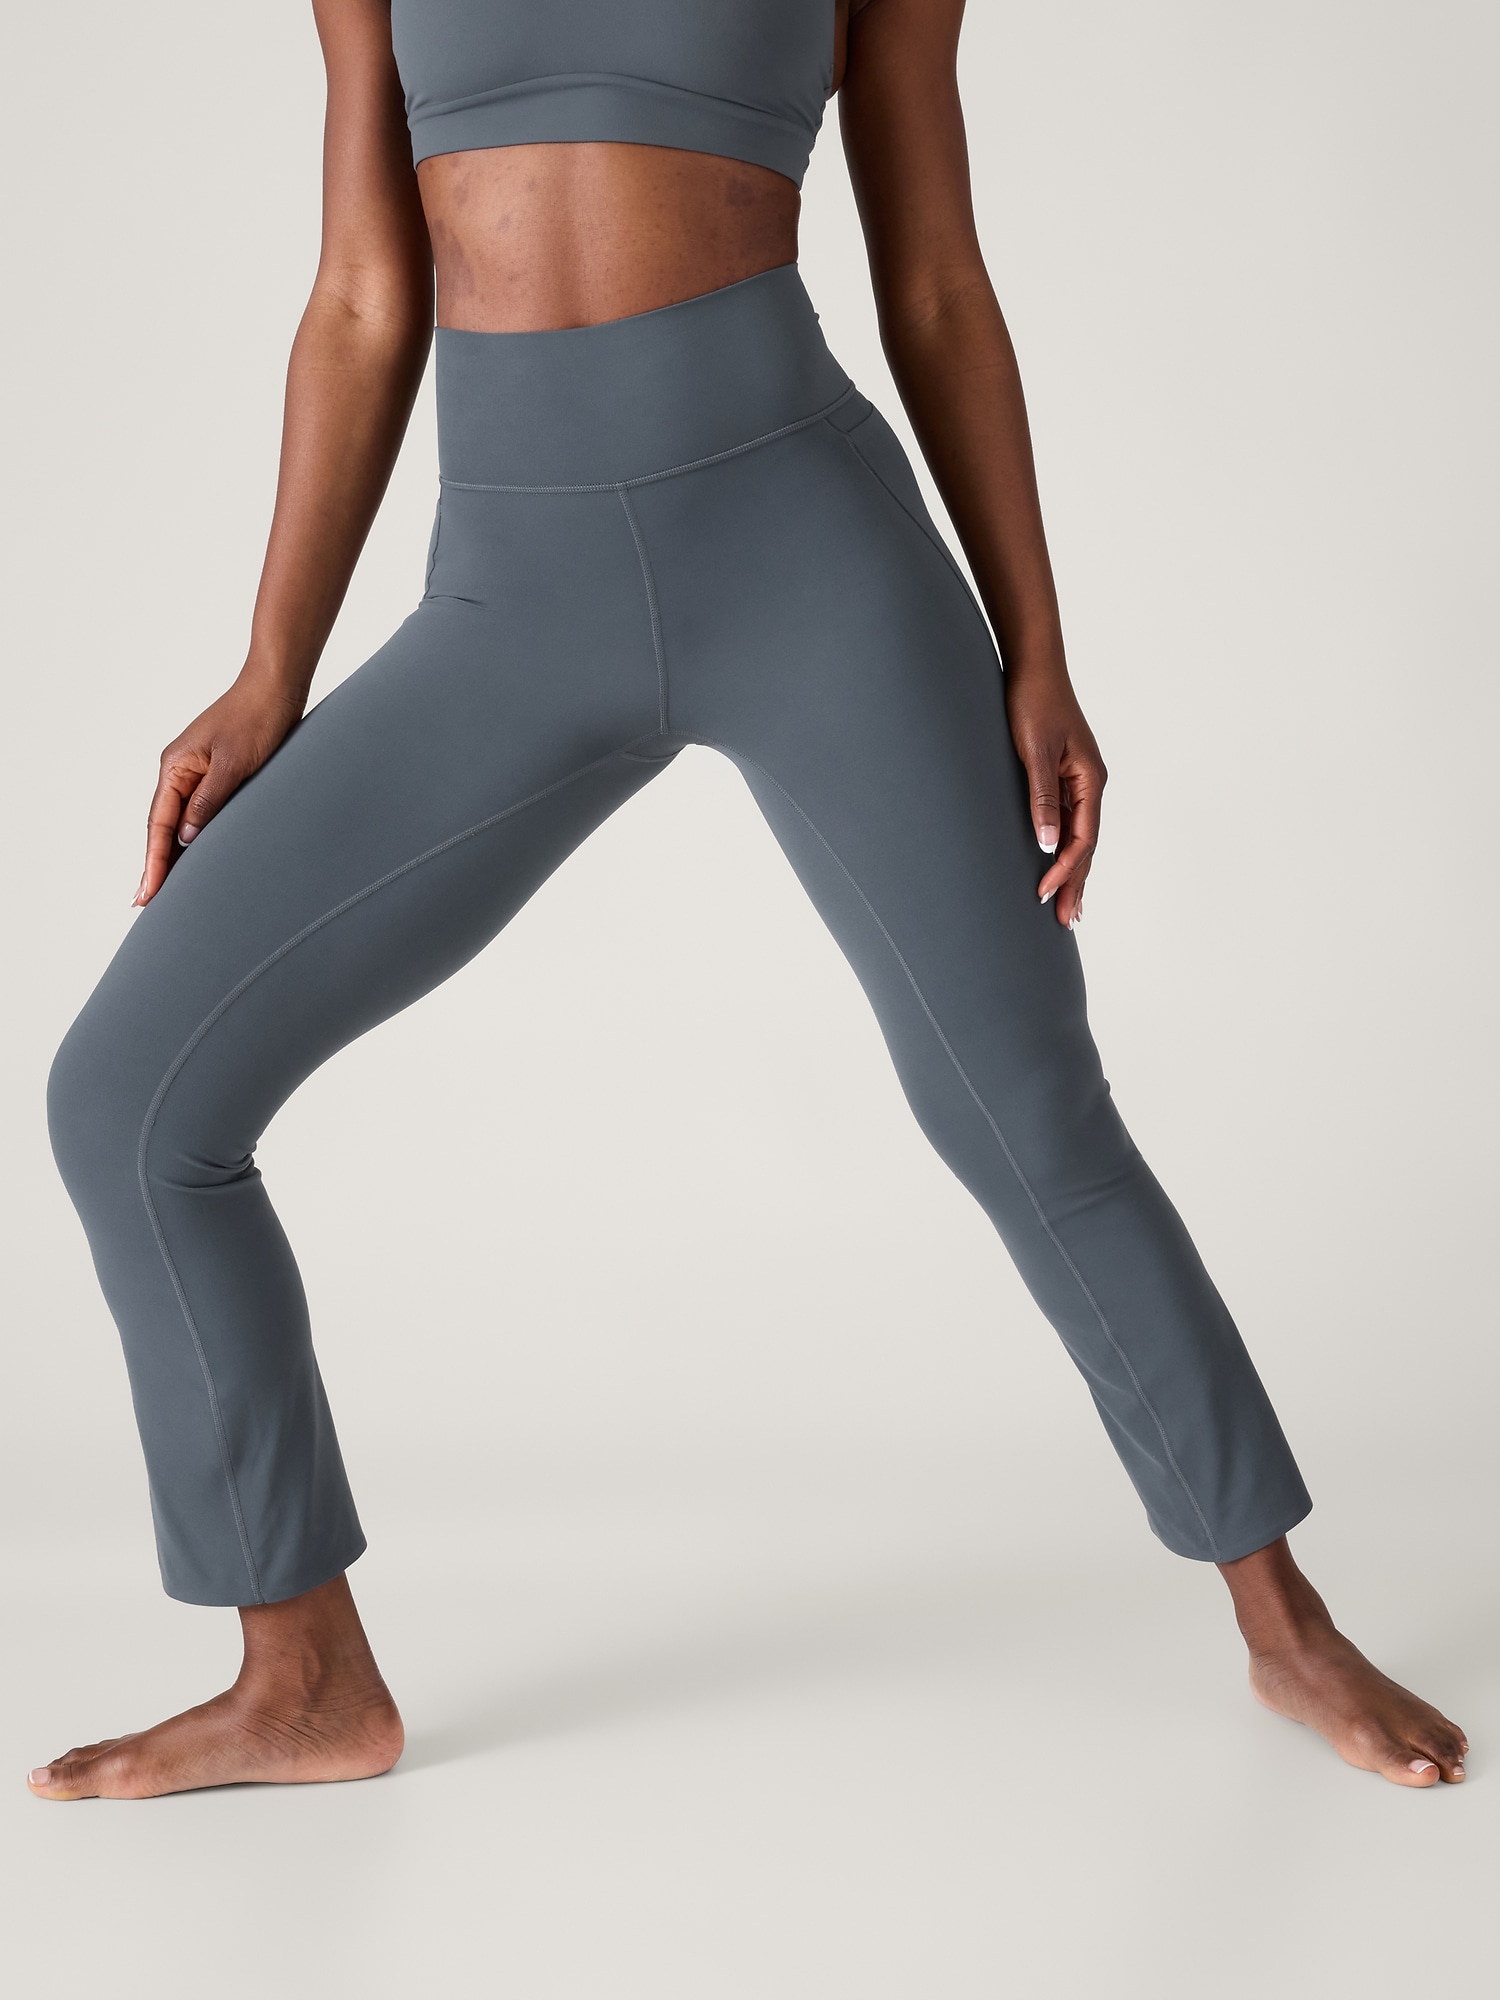 Athleta Transcend Slim Pants Black Size XS - $41 (58% Off Retail